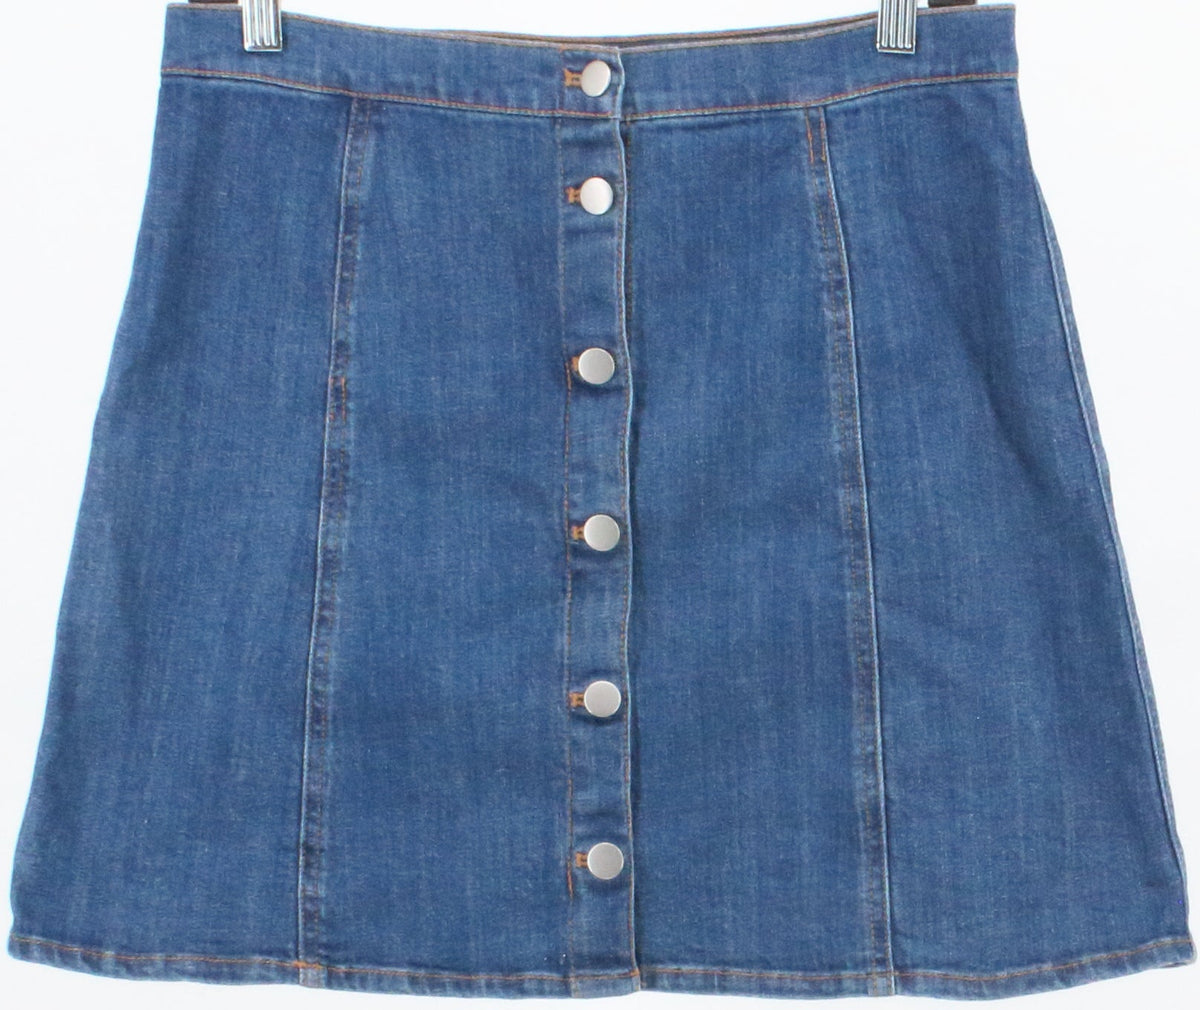 H&M Front Buttons Blue Wash Denim Skirt